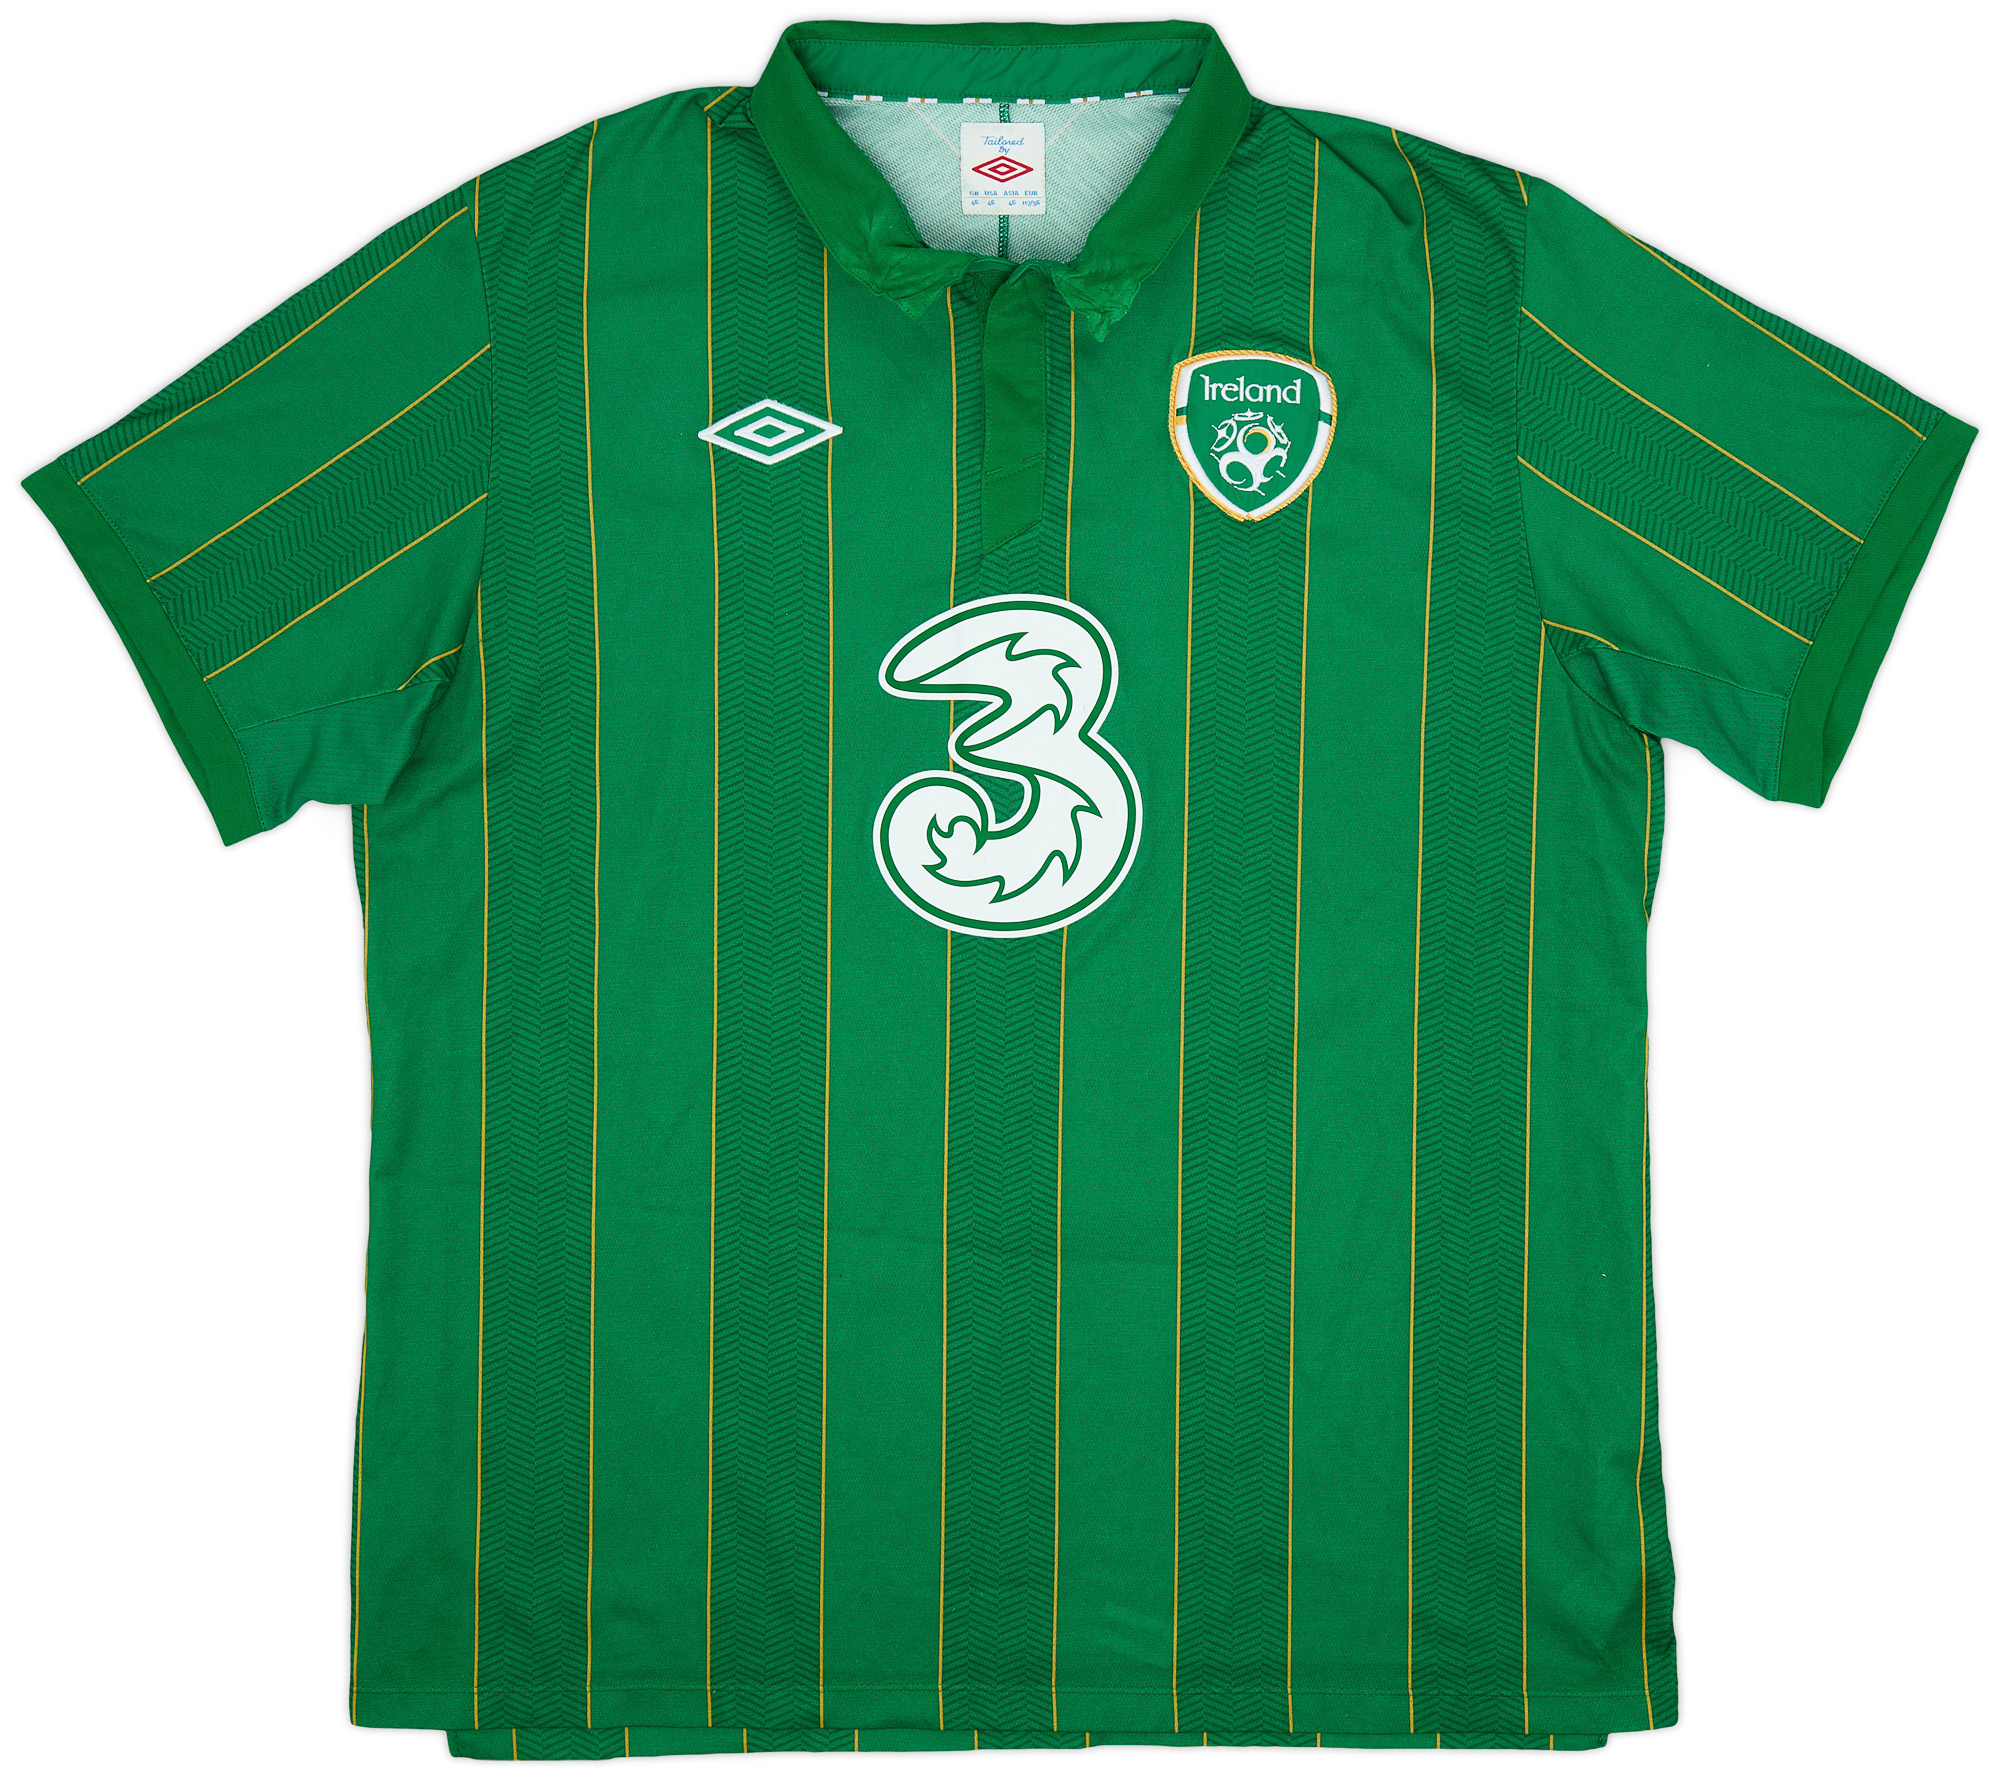 2011-12 Republic of Ireland Home Shirt - 6/10 - ()